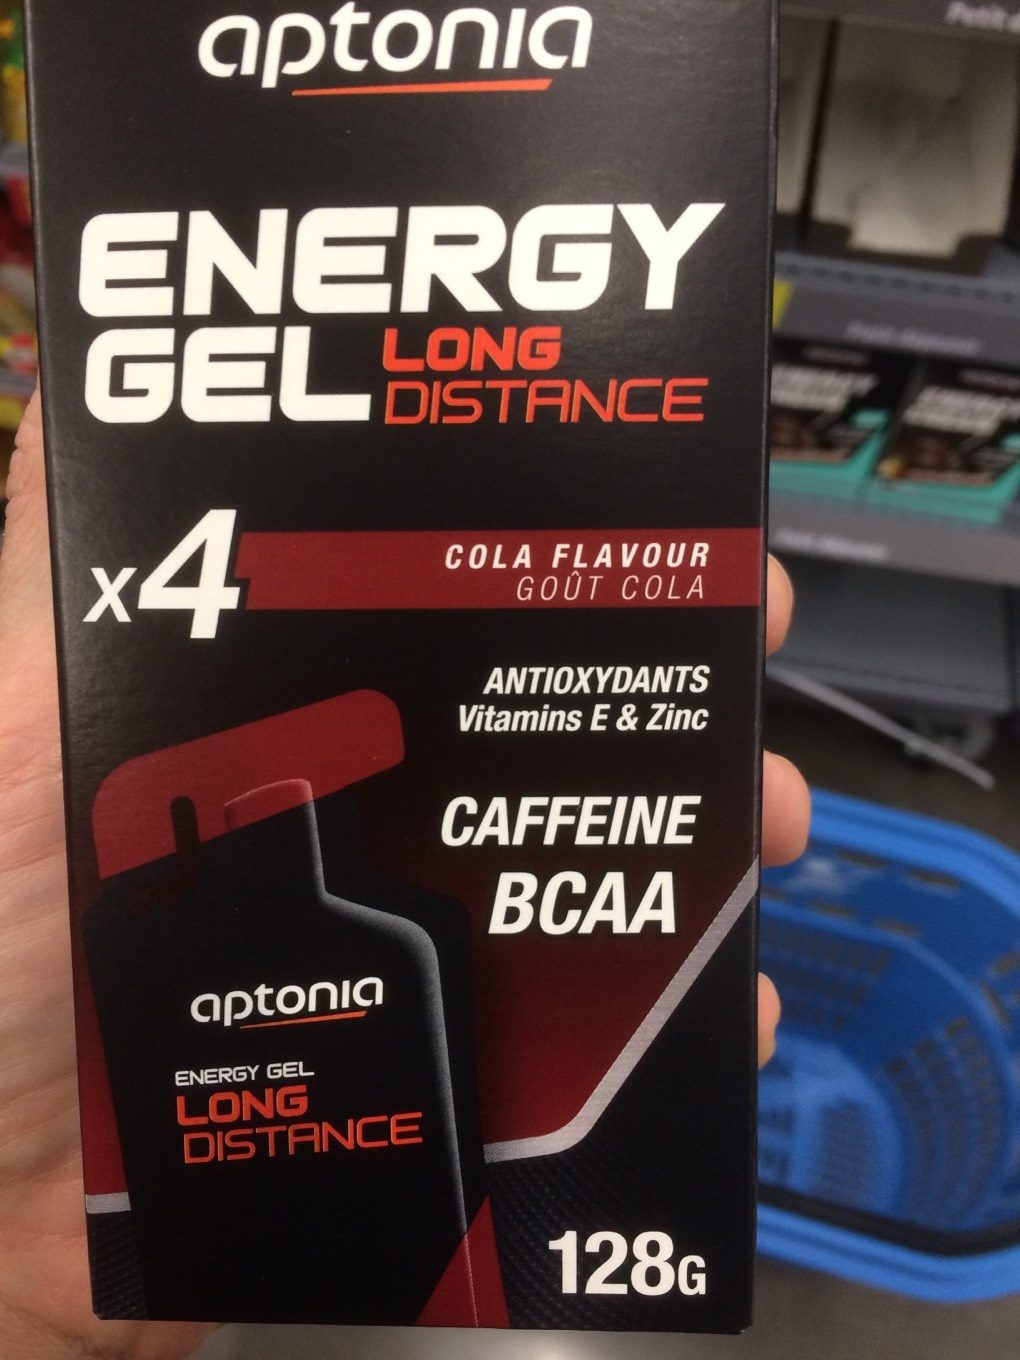 energy gel long distance aptonia